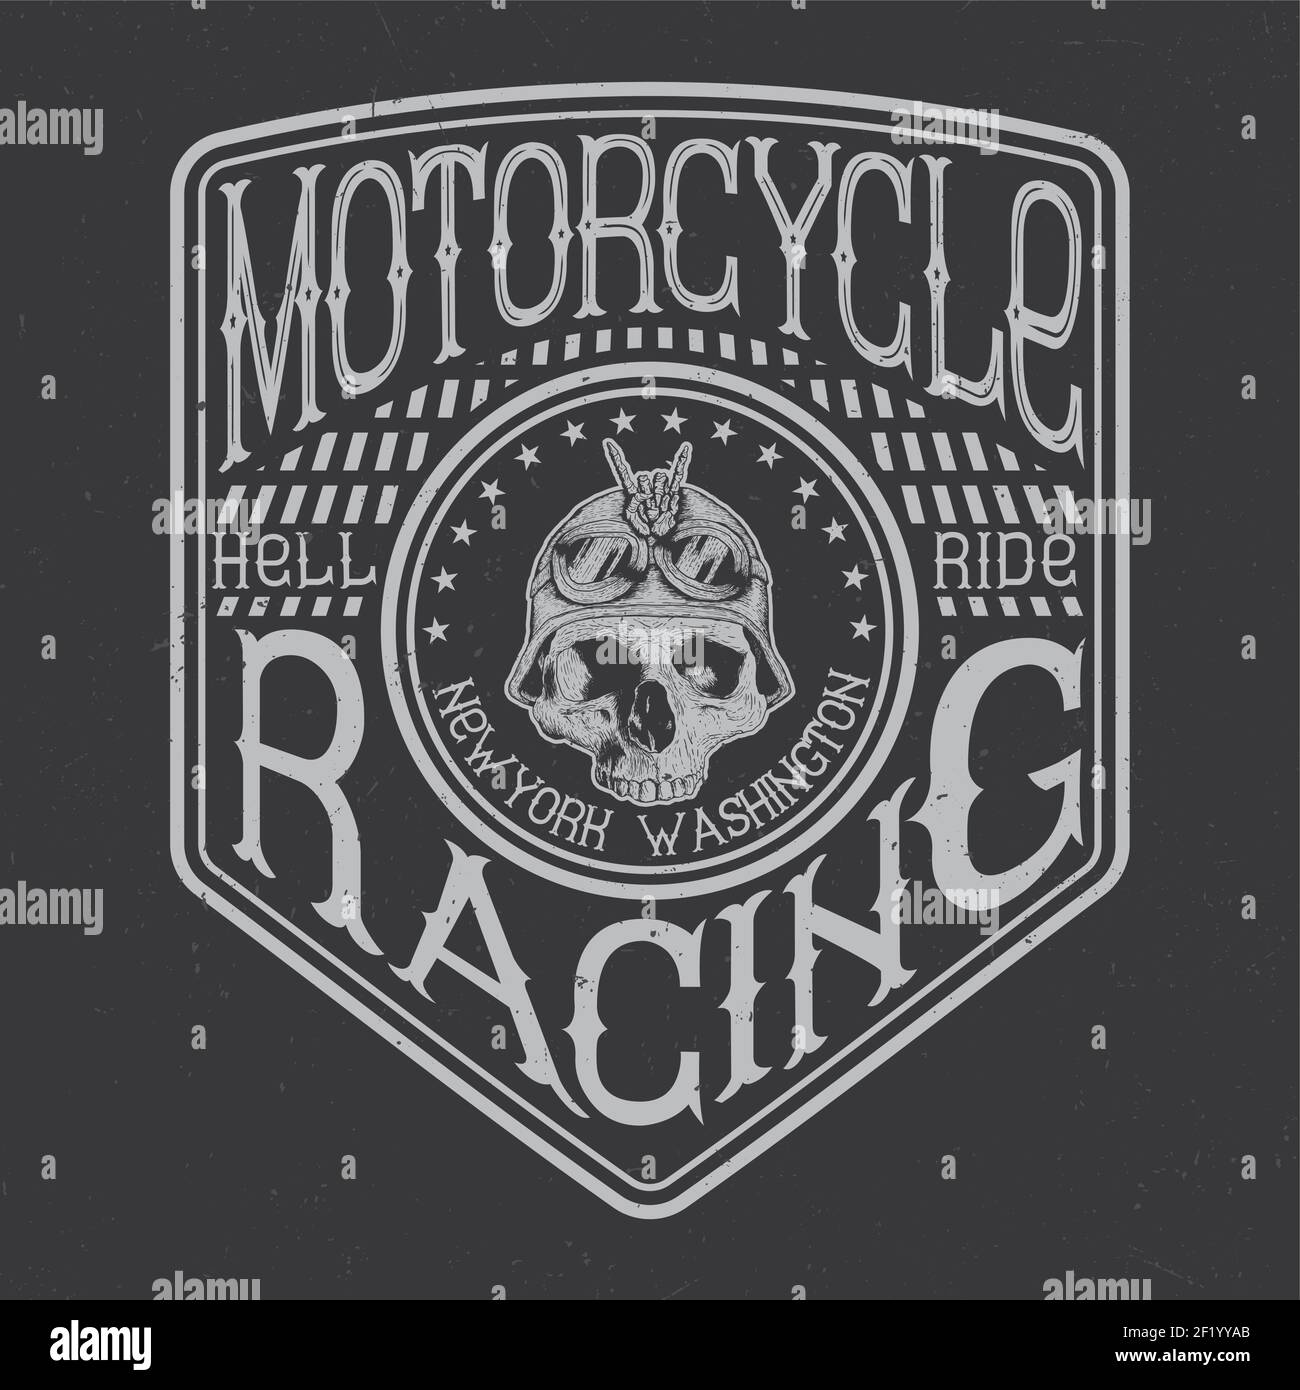 Speedway Motocicleta Metal Placa Enferrujada Moto Esporte Corridas Vetor  Vintage imagem vetorial de Seamartini© 462324892